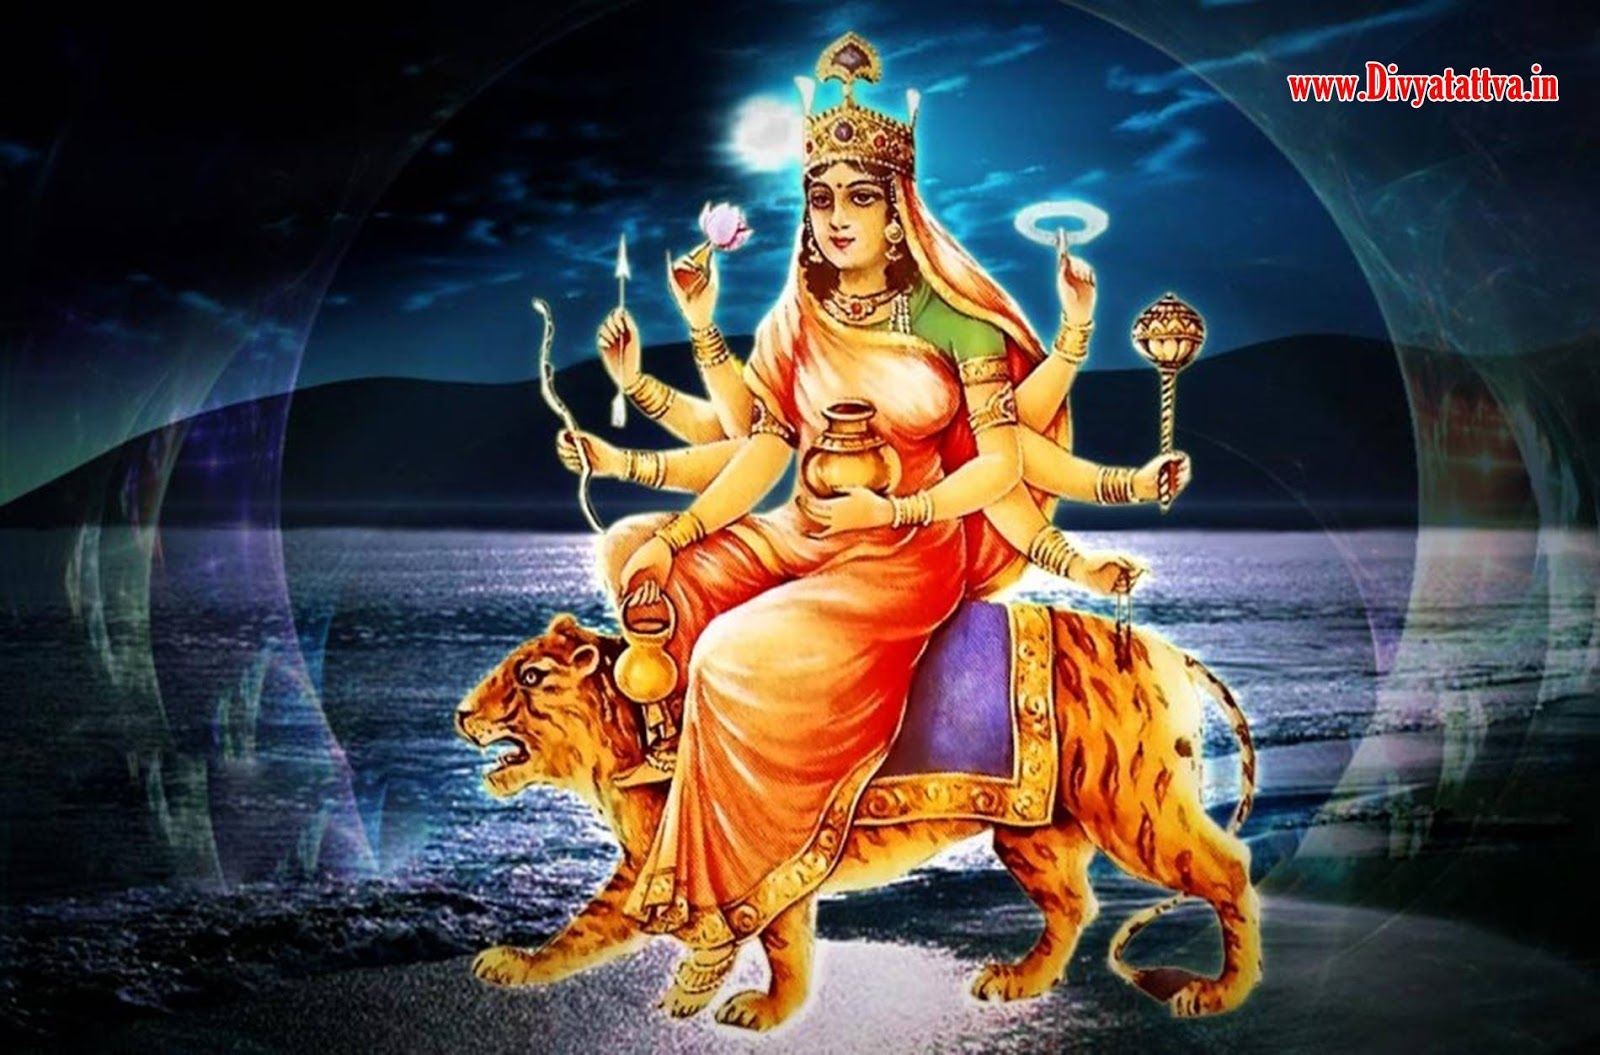 Divyatattva Astrology Free Horoscopes Psychic Tarot Yoga Tantra Occult Image Videos, Maa Durga Devi Wallpaper Goddess Durga Mata Ji Adishakti Background Maa Durga wallpaper HD Ma Durga Photo Full size HD